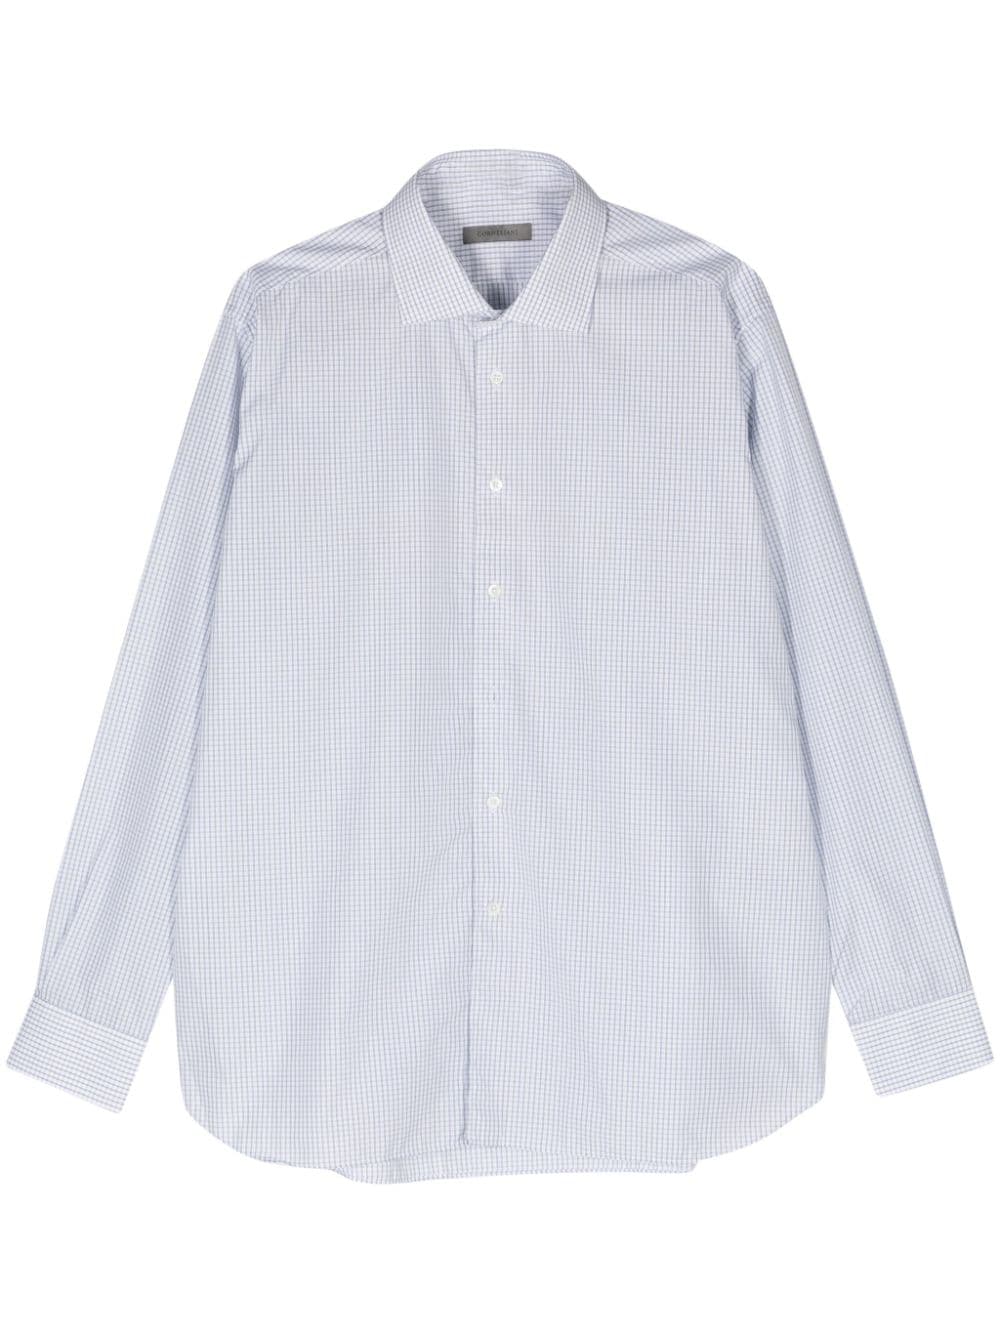 Corneliani Checked Cotton Shirt In Blue